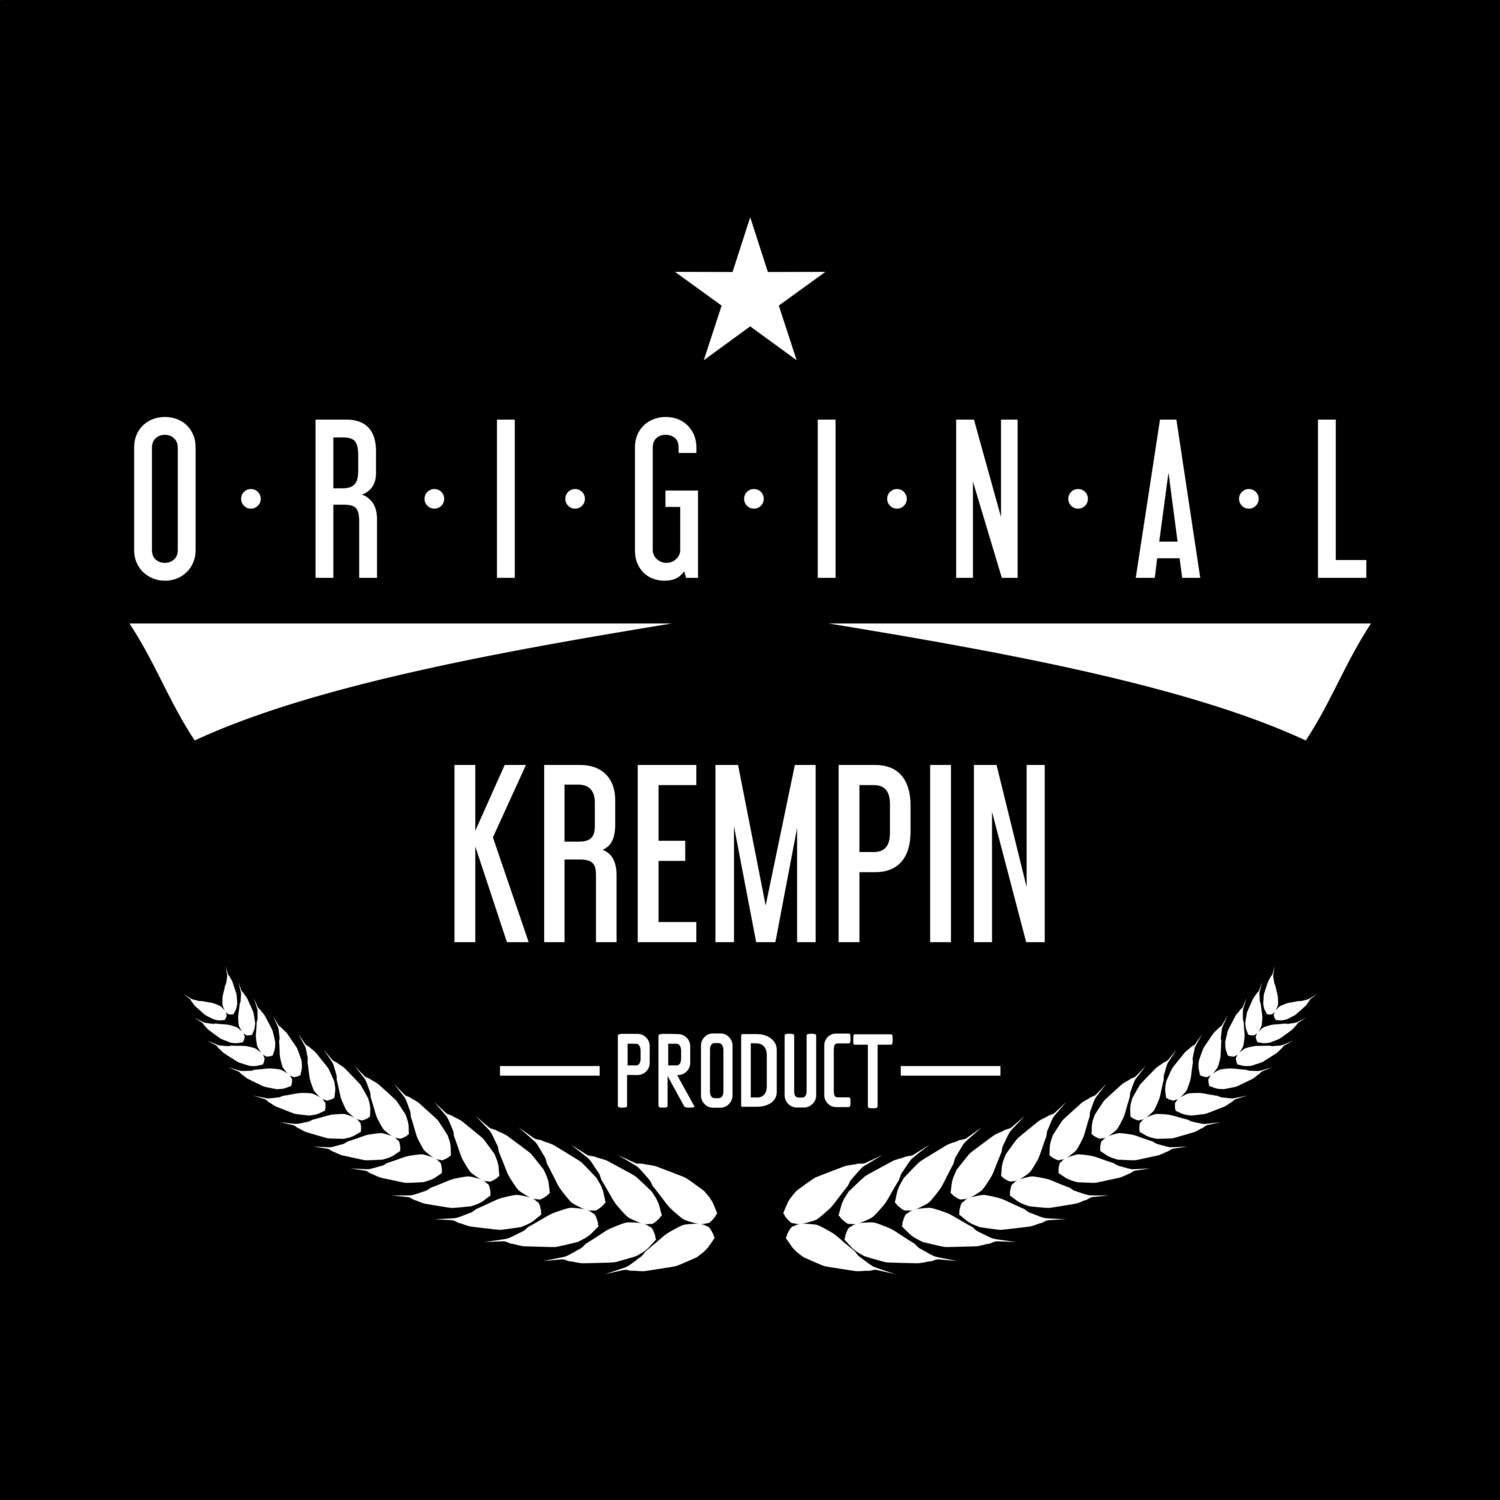 Krempin T-Shirt »Original Product«